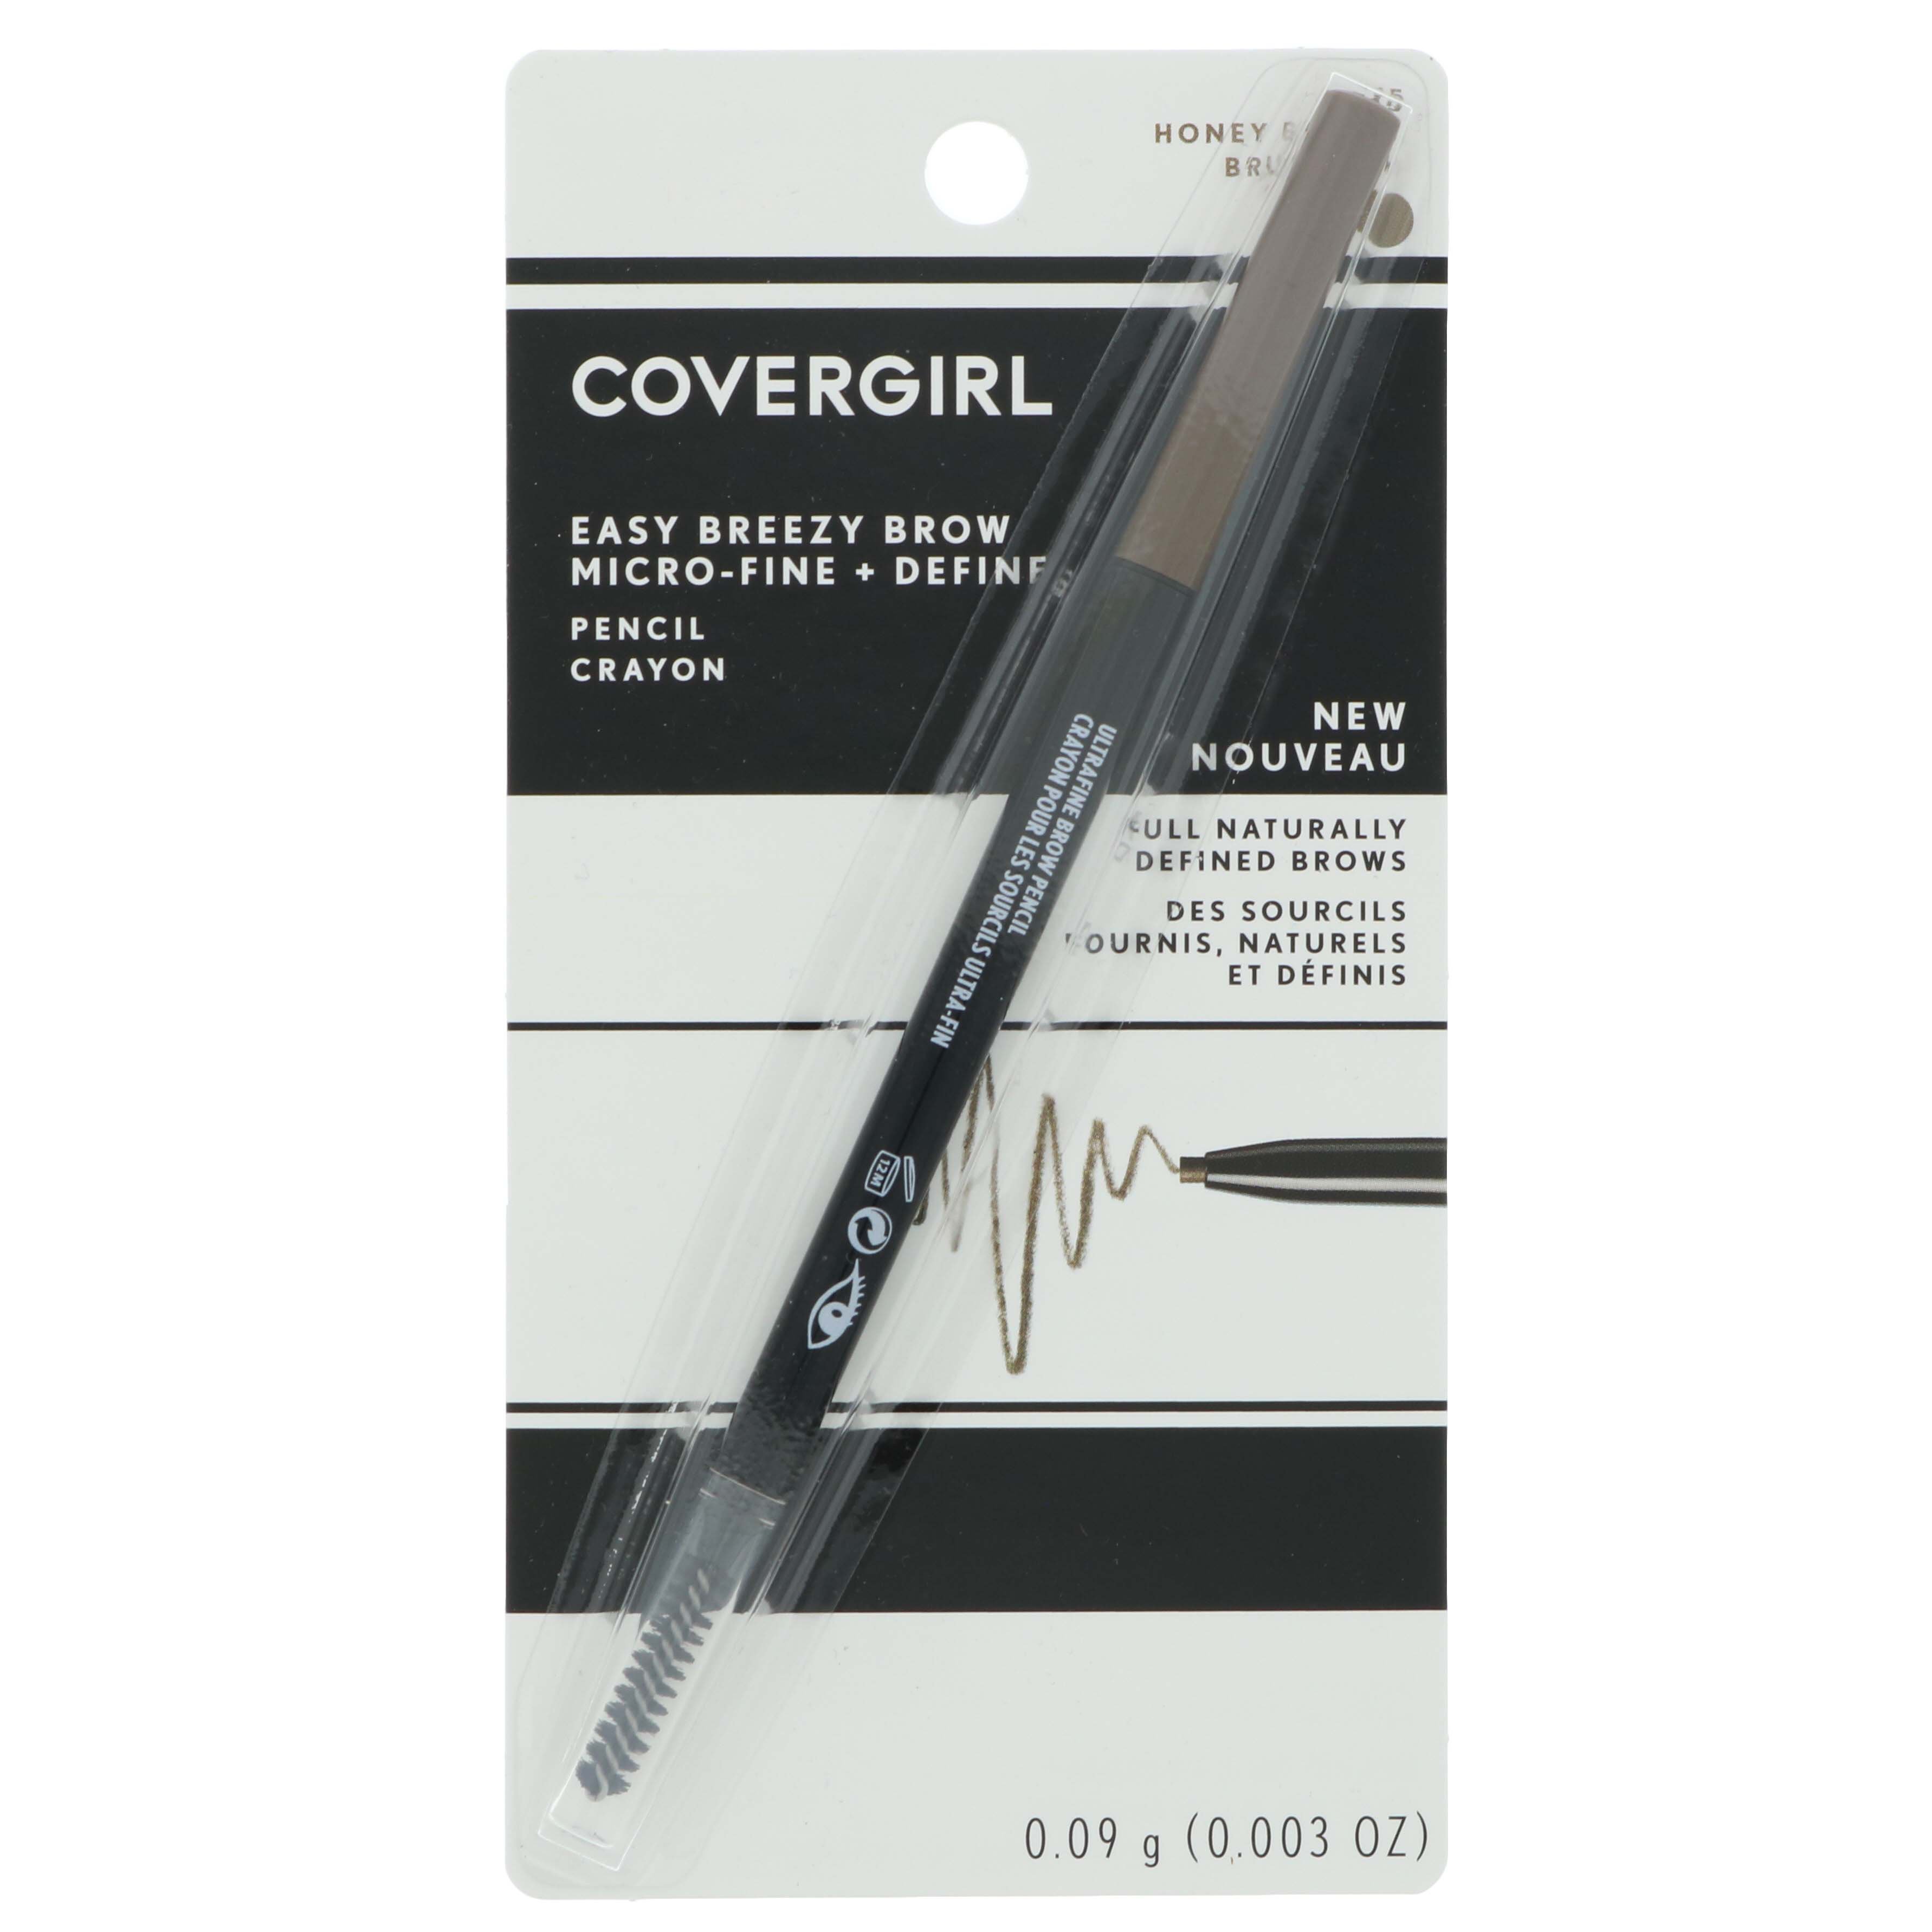 Easy Breezy Brow Micro Fine Fill + Define Eyebrow Pencil